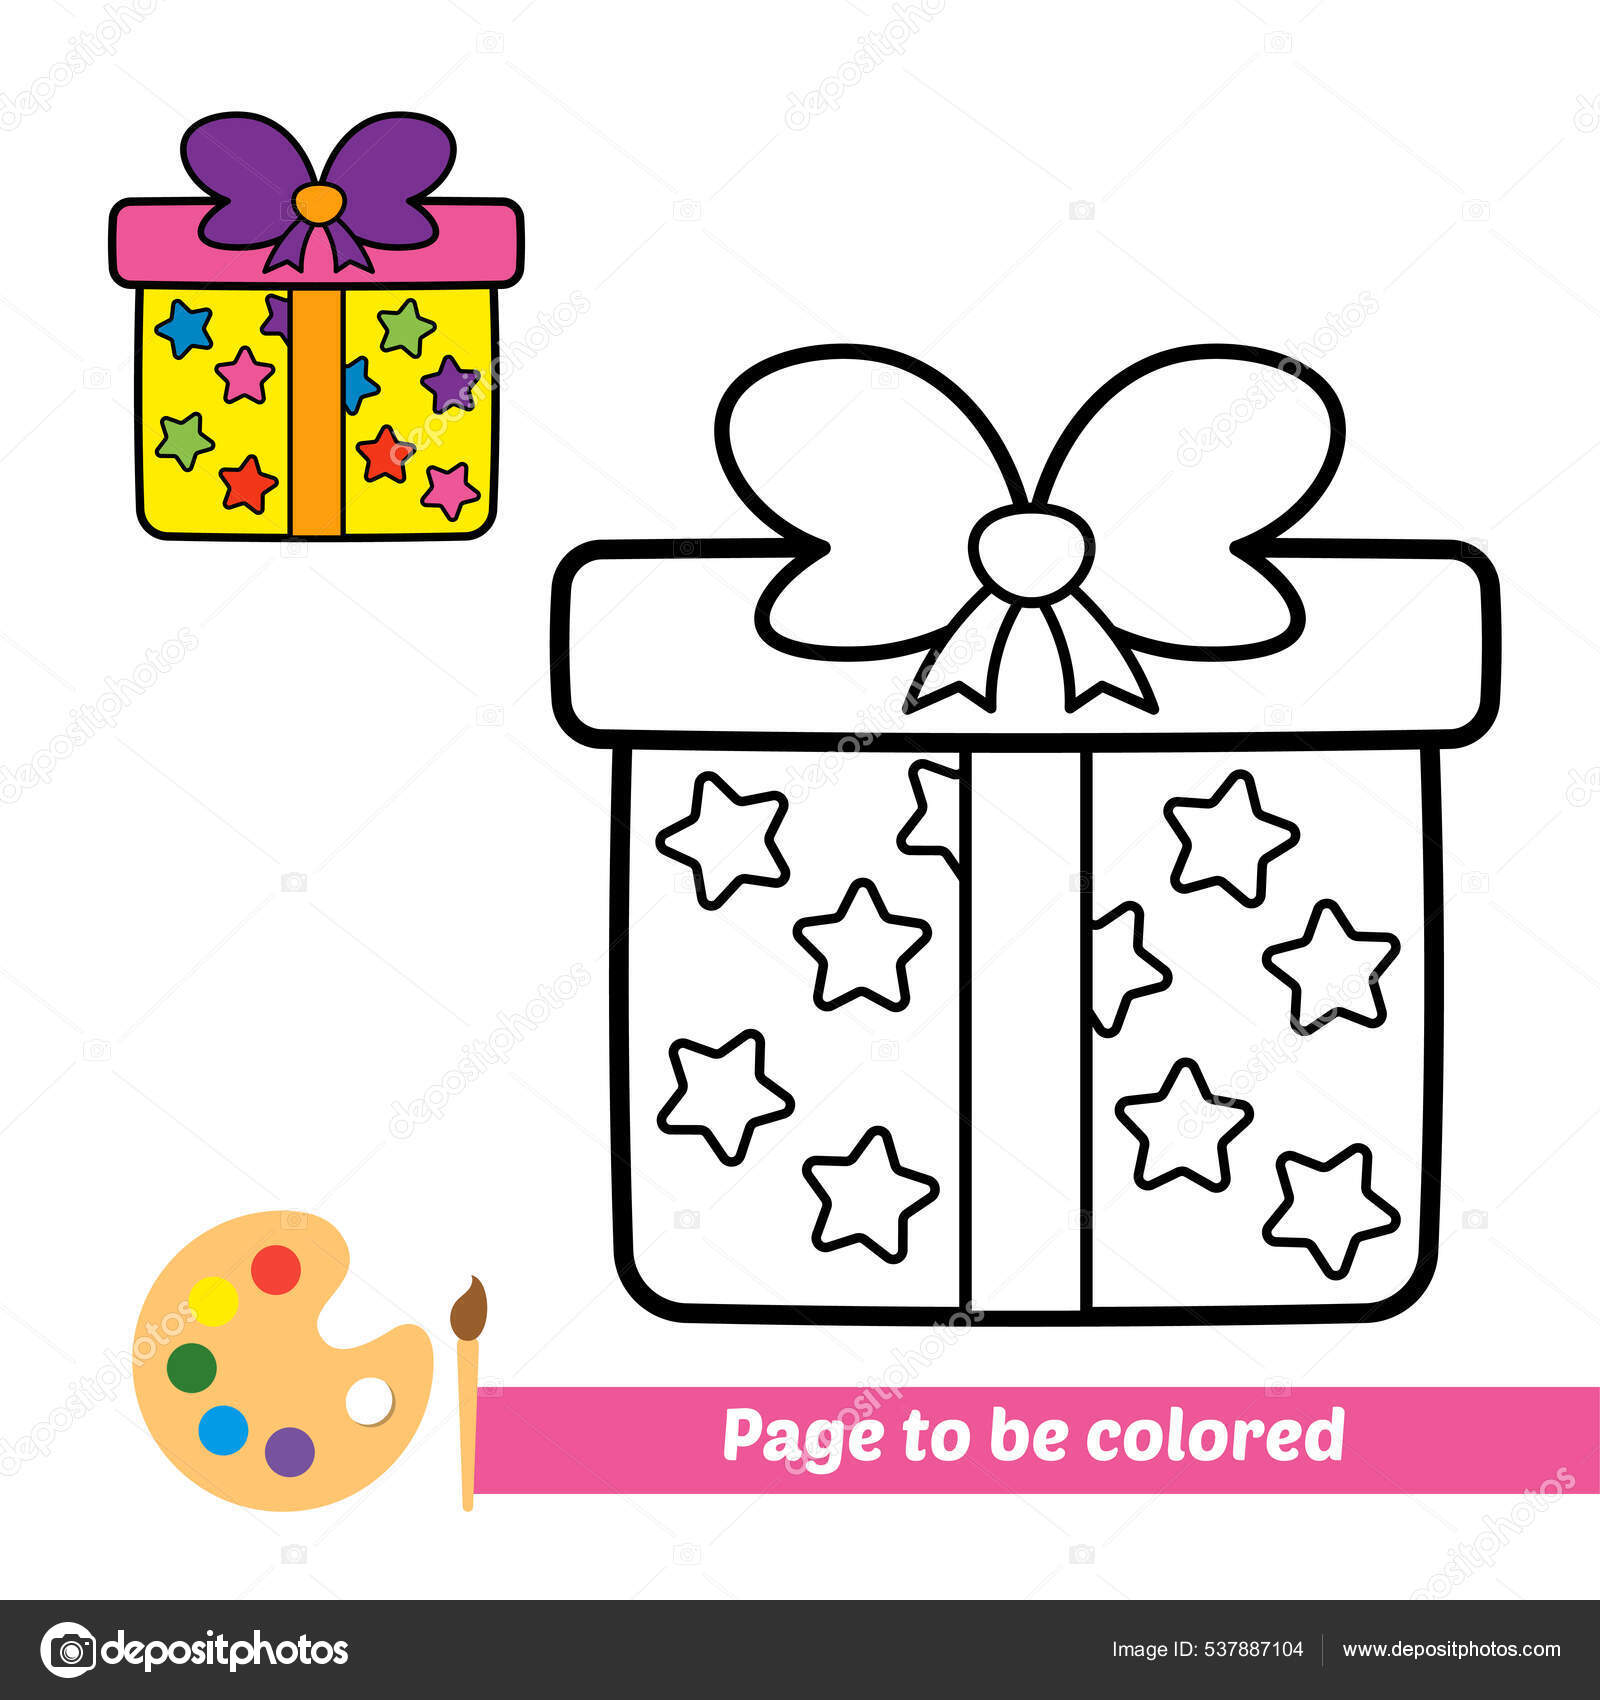 https://st.depositphotos.com/37226496/53788/v/1600/depositphotos_537887104-stock-illustration-coloring-book-gift-box-vector.jpg